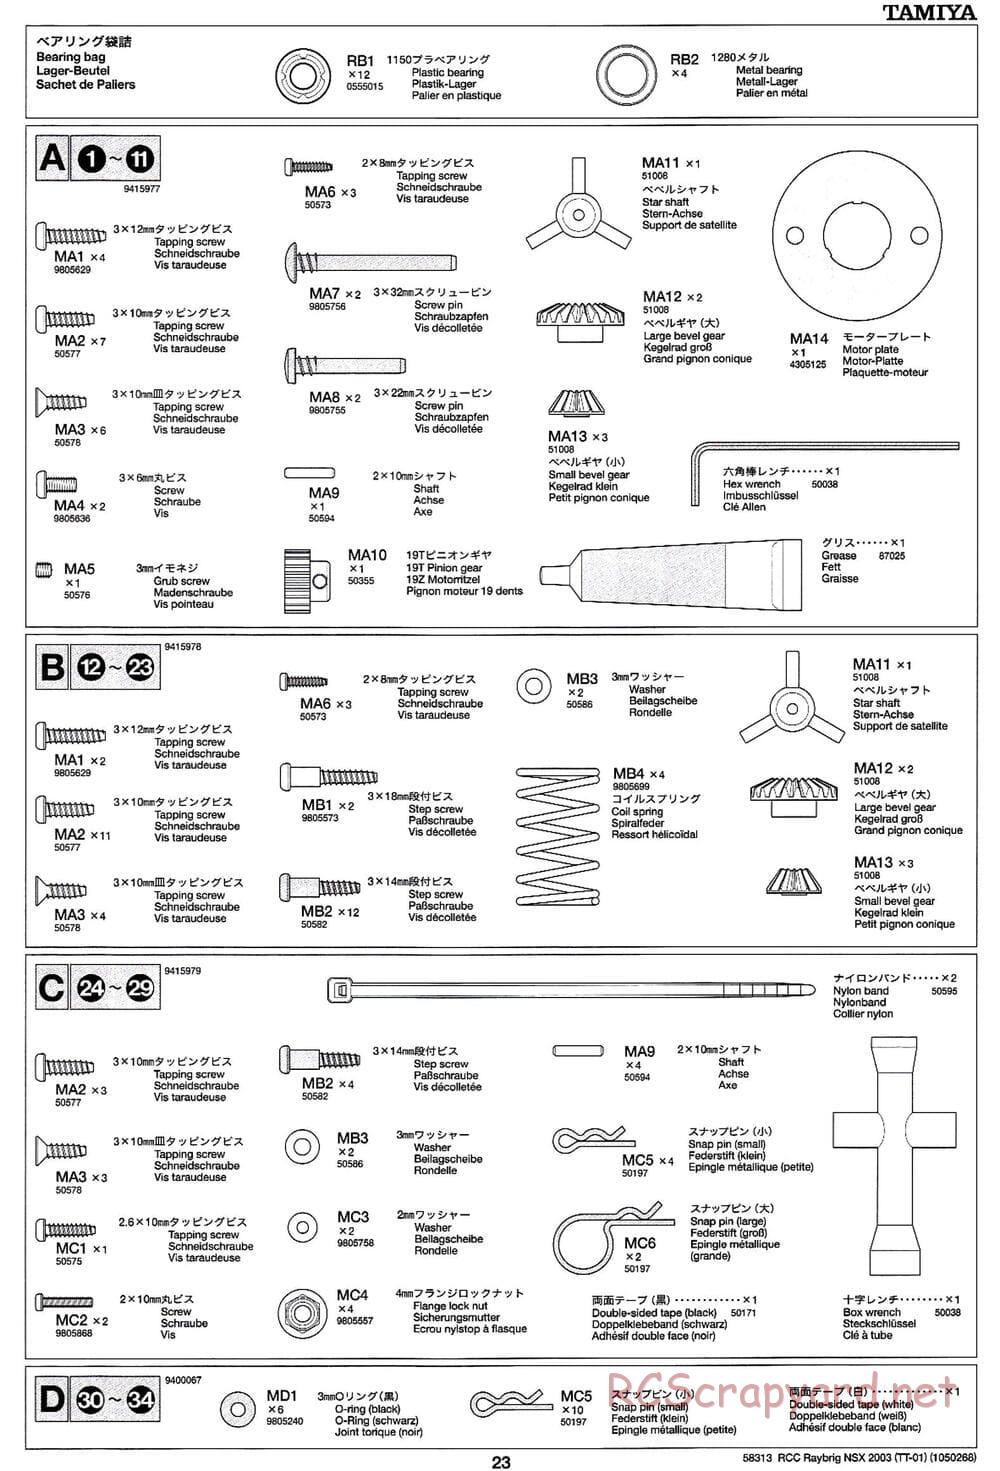 Tamiya - Raybrig NSX 2003 - TT-01 Chassis - Manual - Page 23